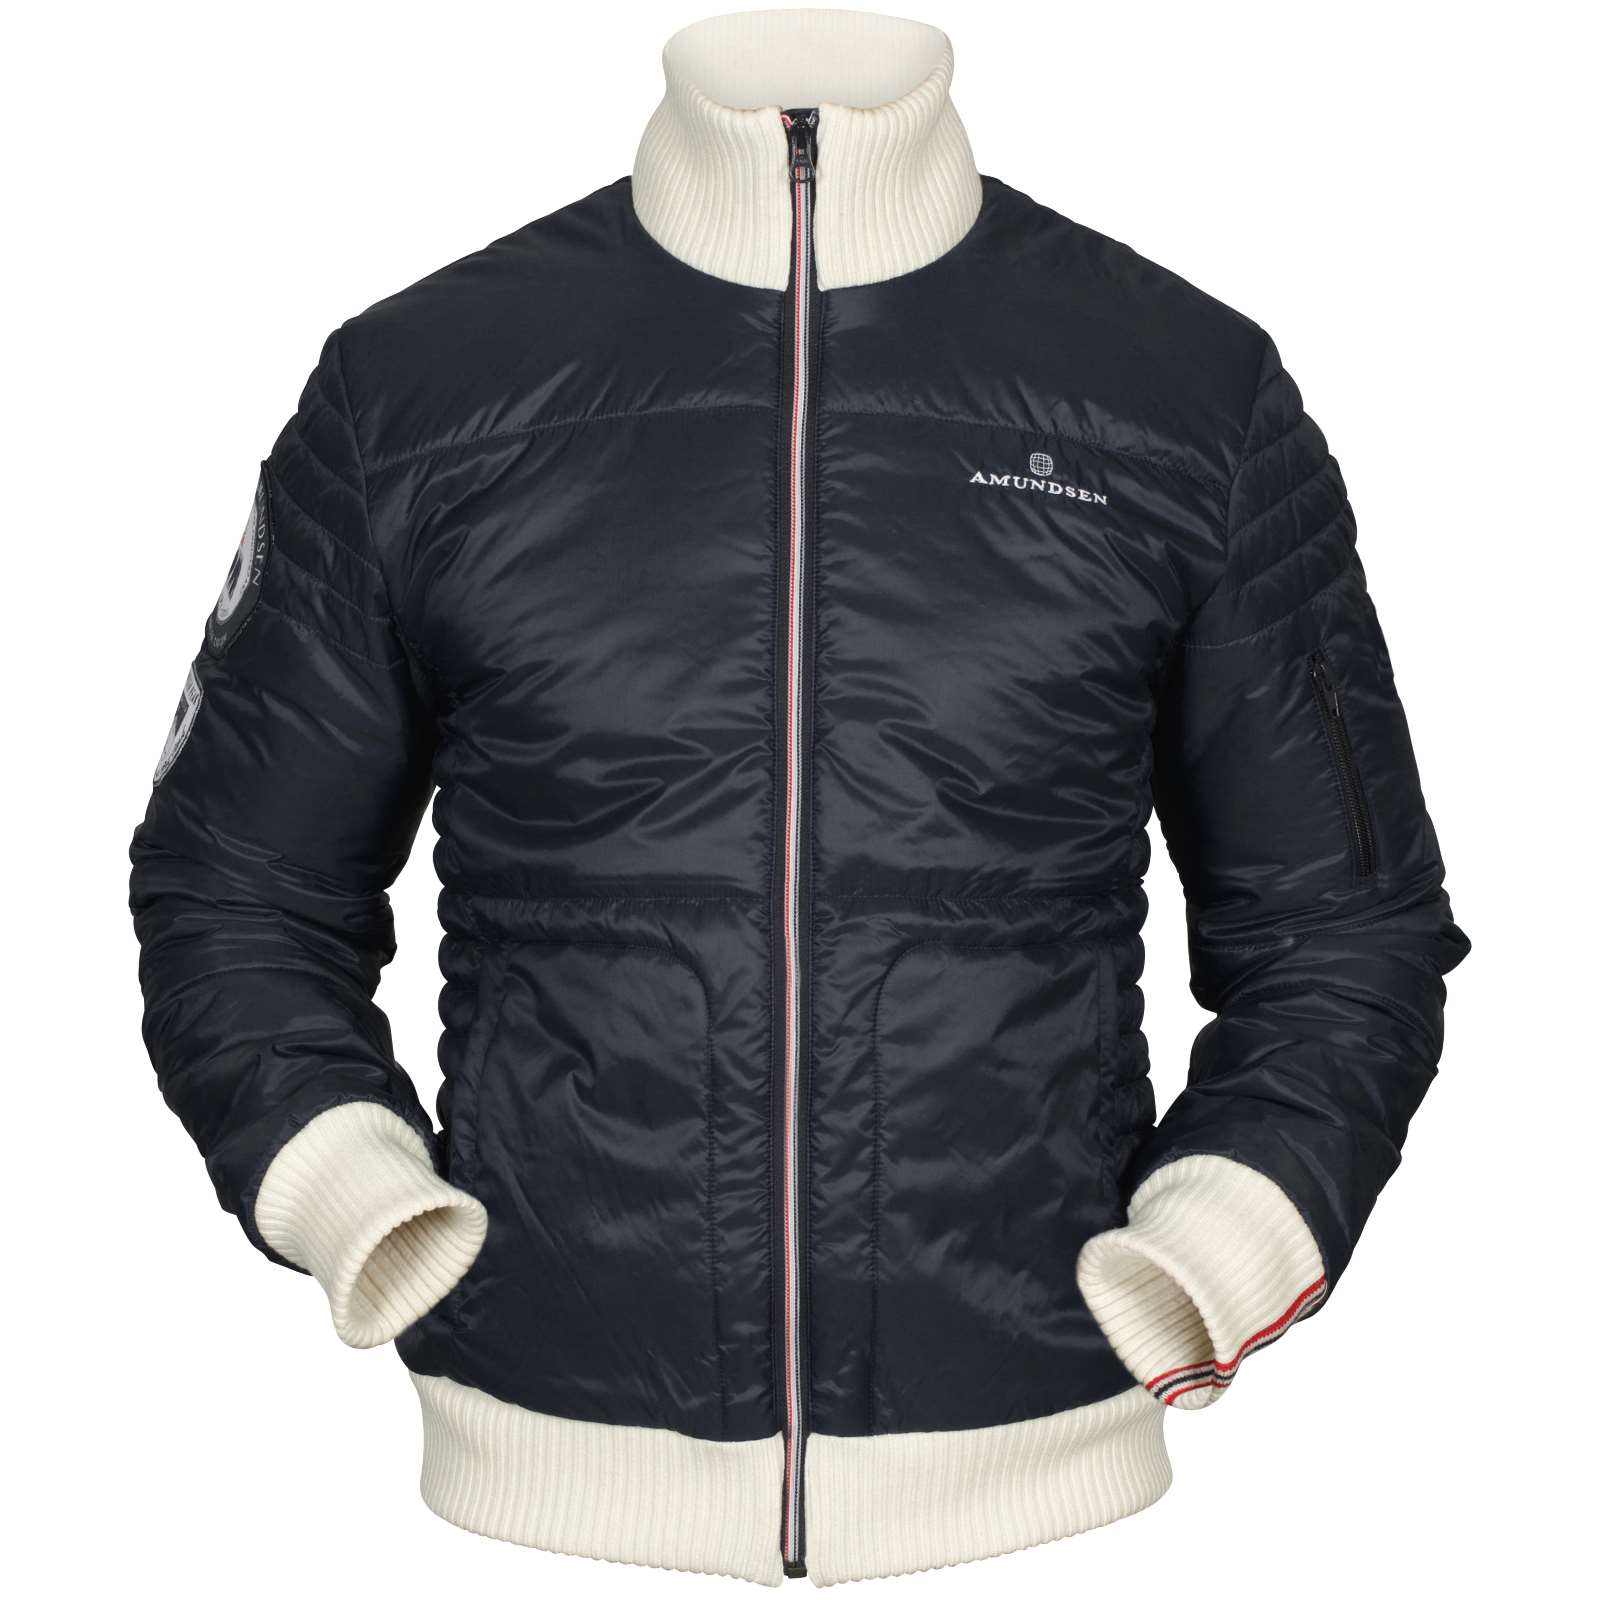 Buy Amundsen Men Classic Jacket - Primaloft from Outnorth